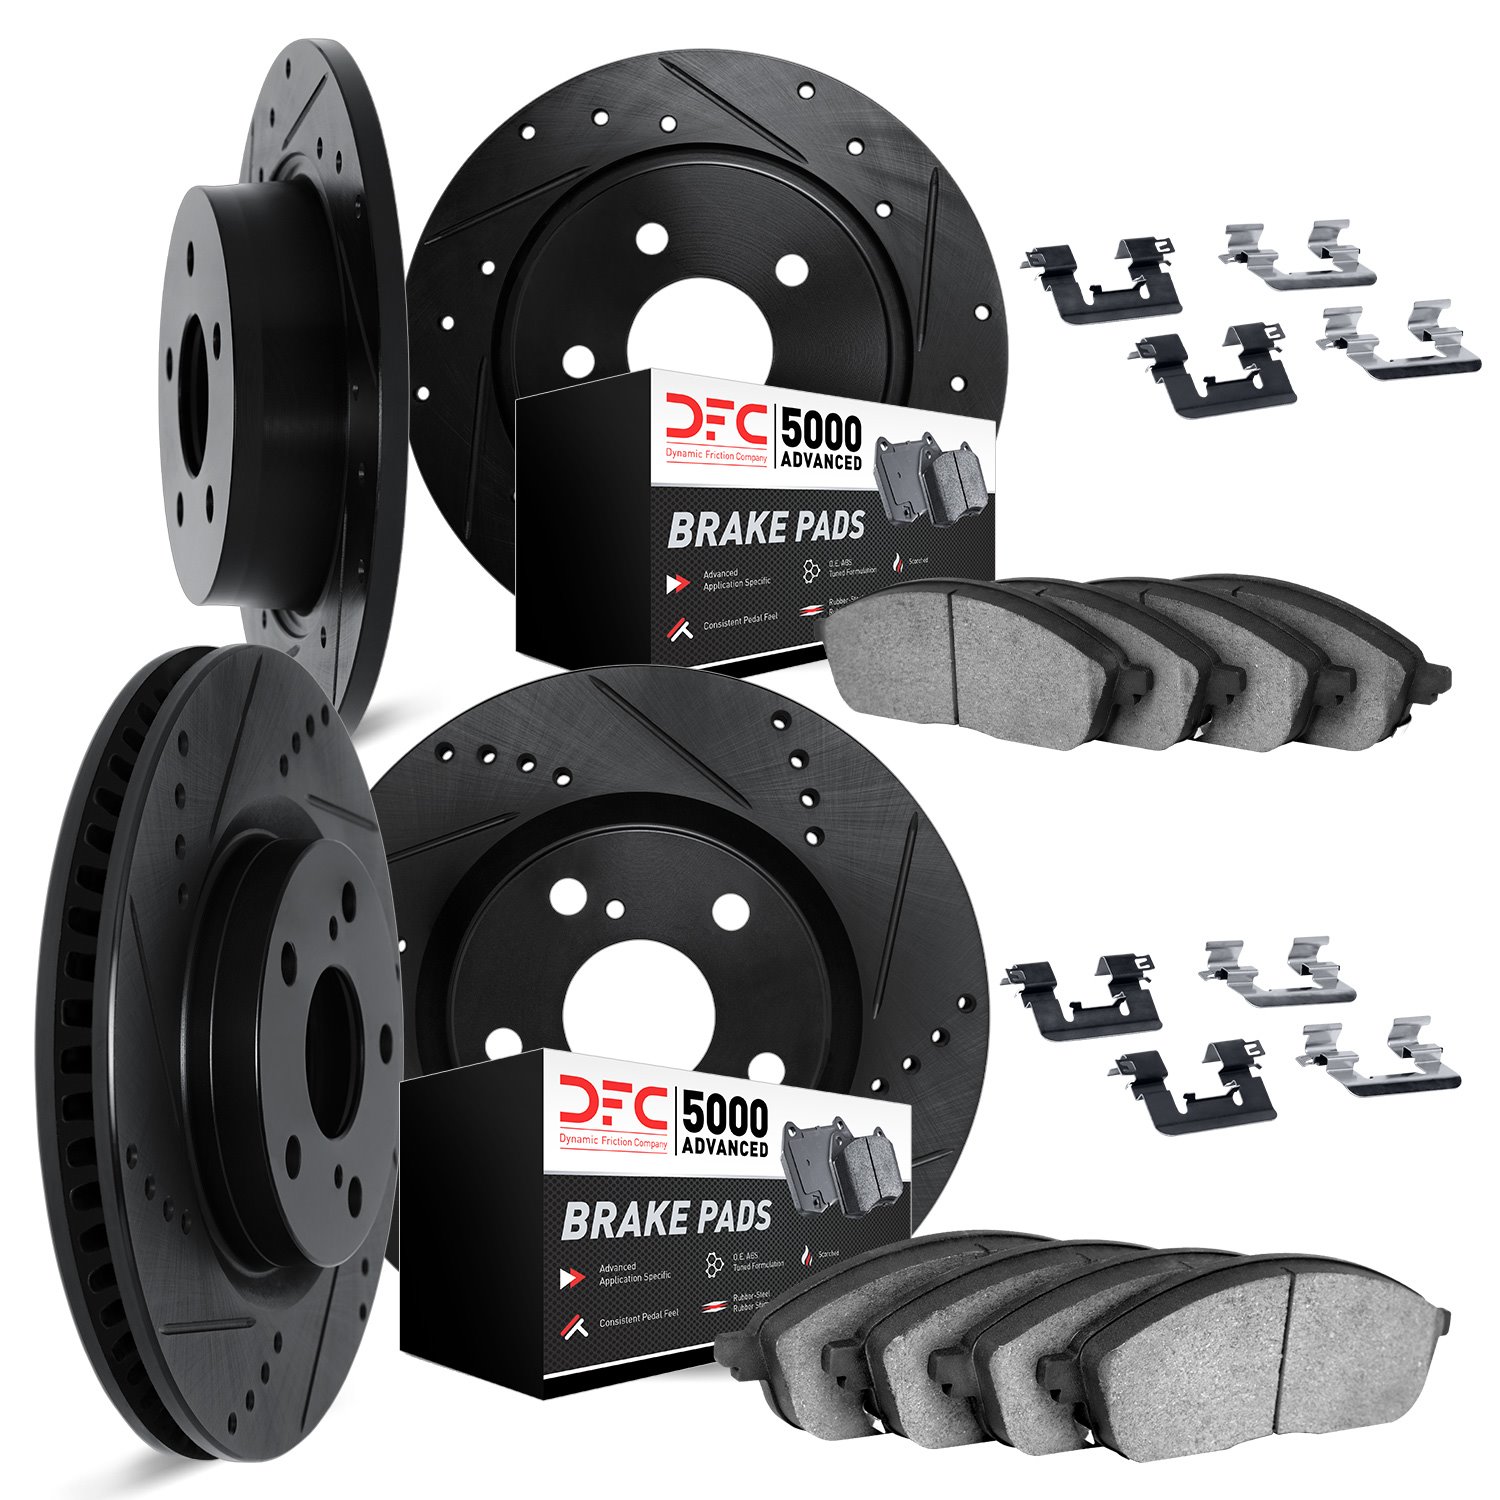 8514-80036 Drilled/Slotted Brake Rotors w/5000 Advanced Brake Pads Kit & Hardware [Black], 2013-2015 Ford/Lincoln/Mercury/Mazda,